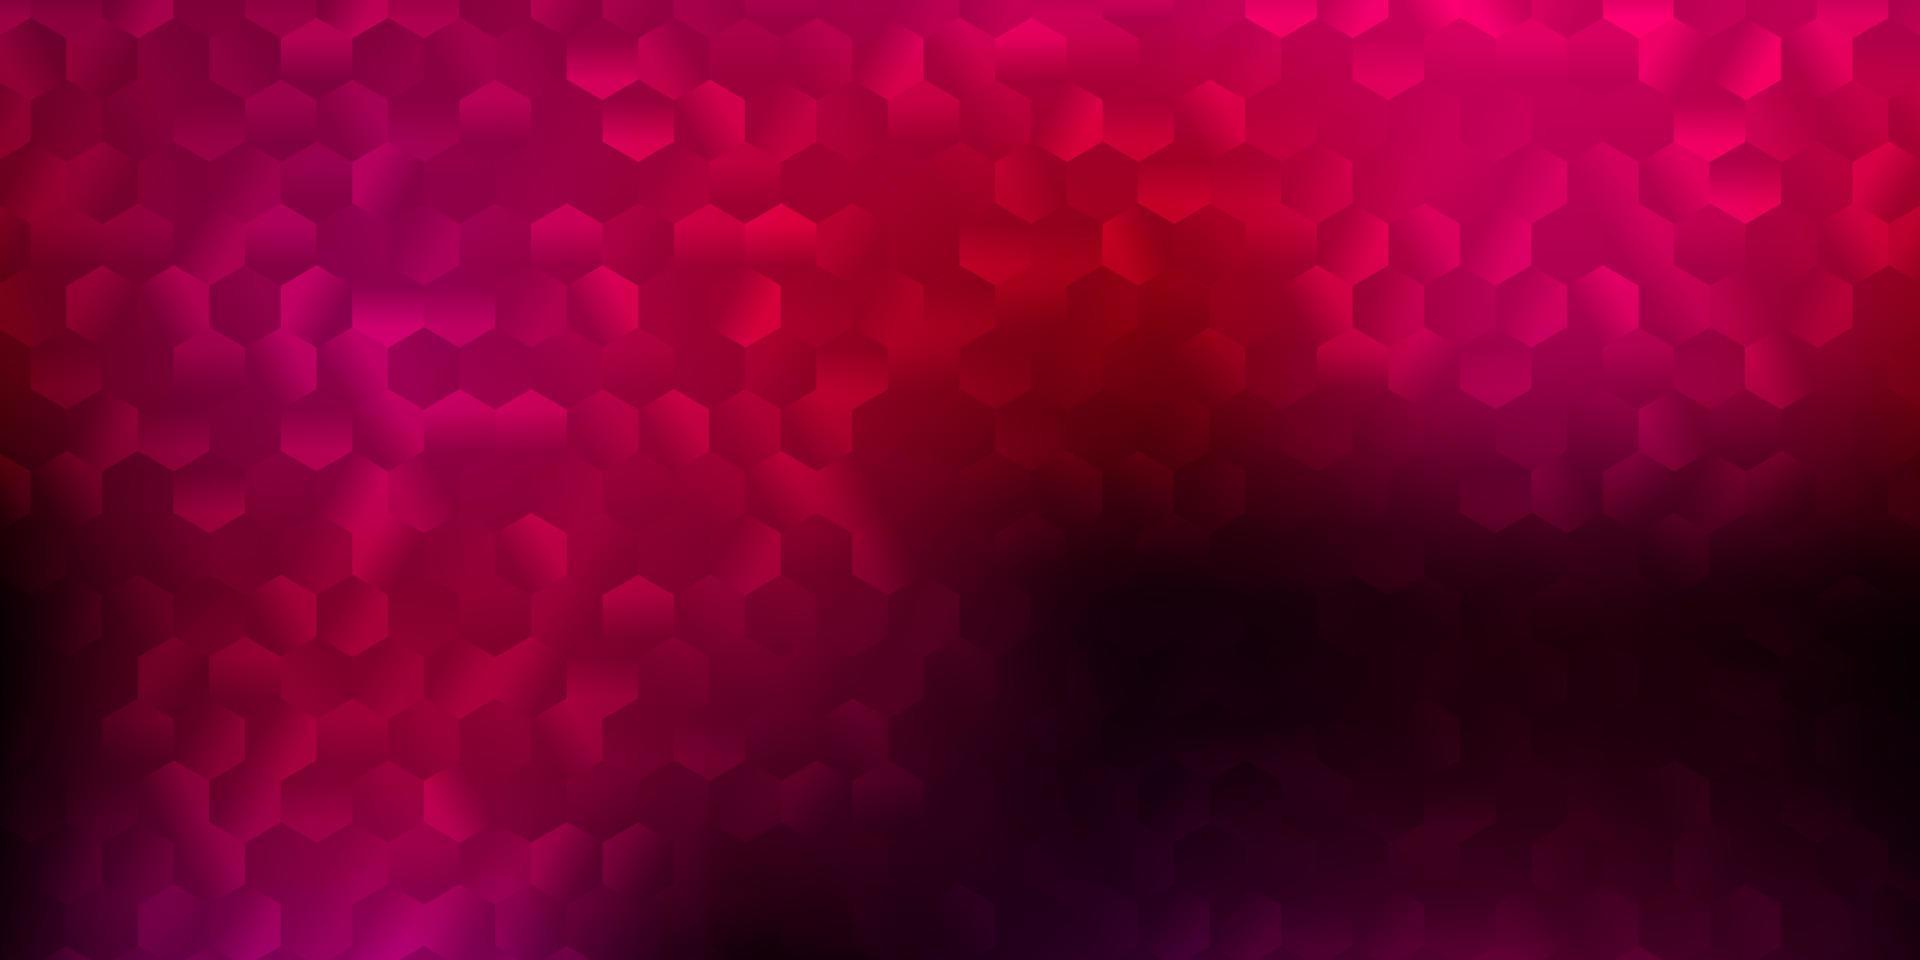 Dark pink vector template in a hexagonal style.